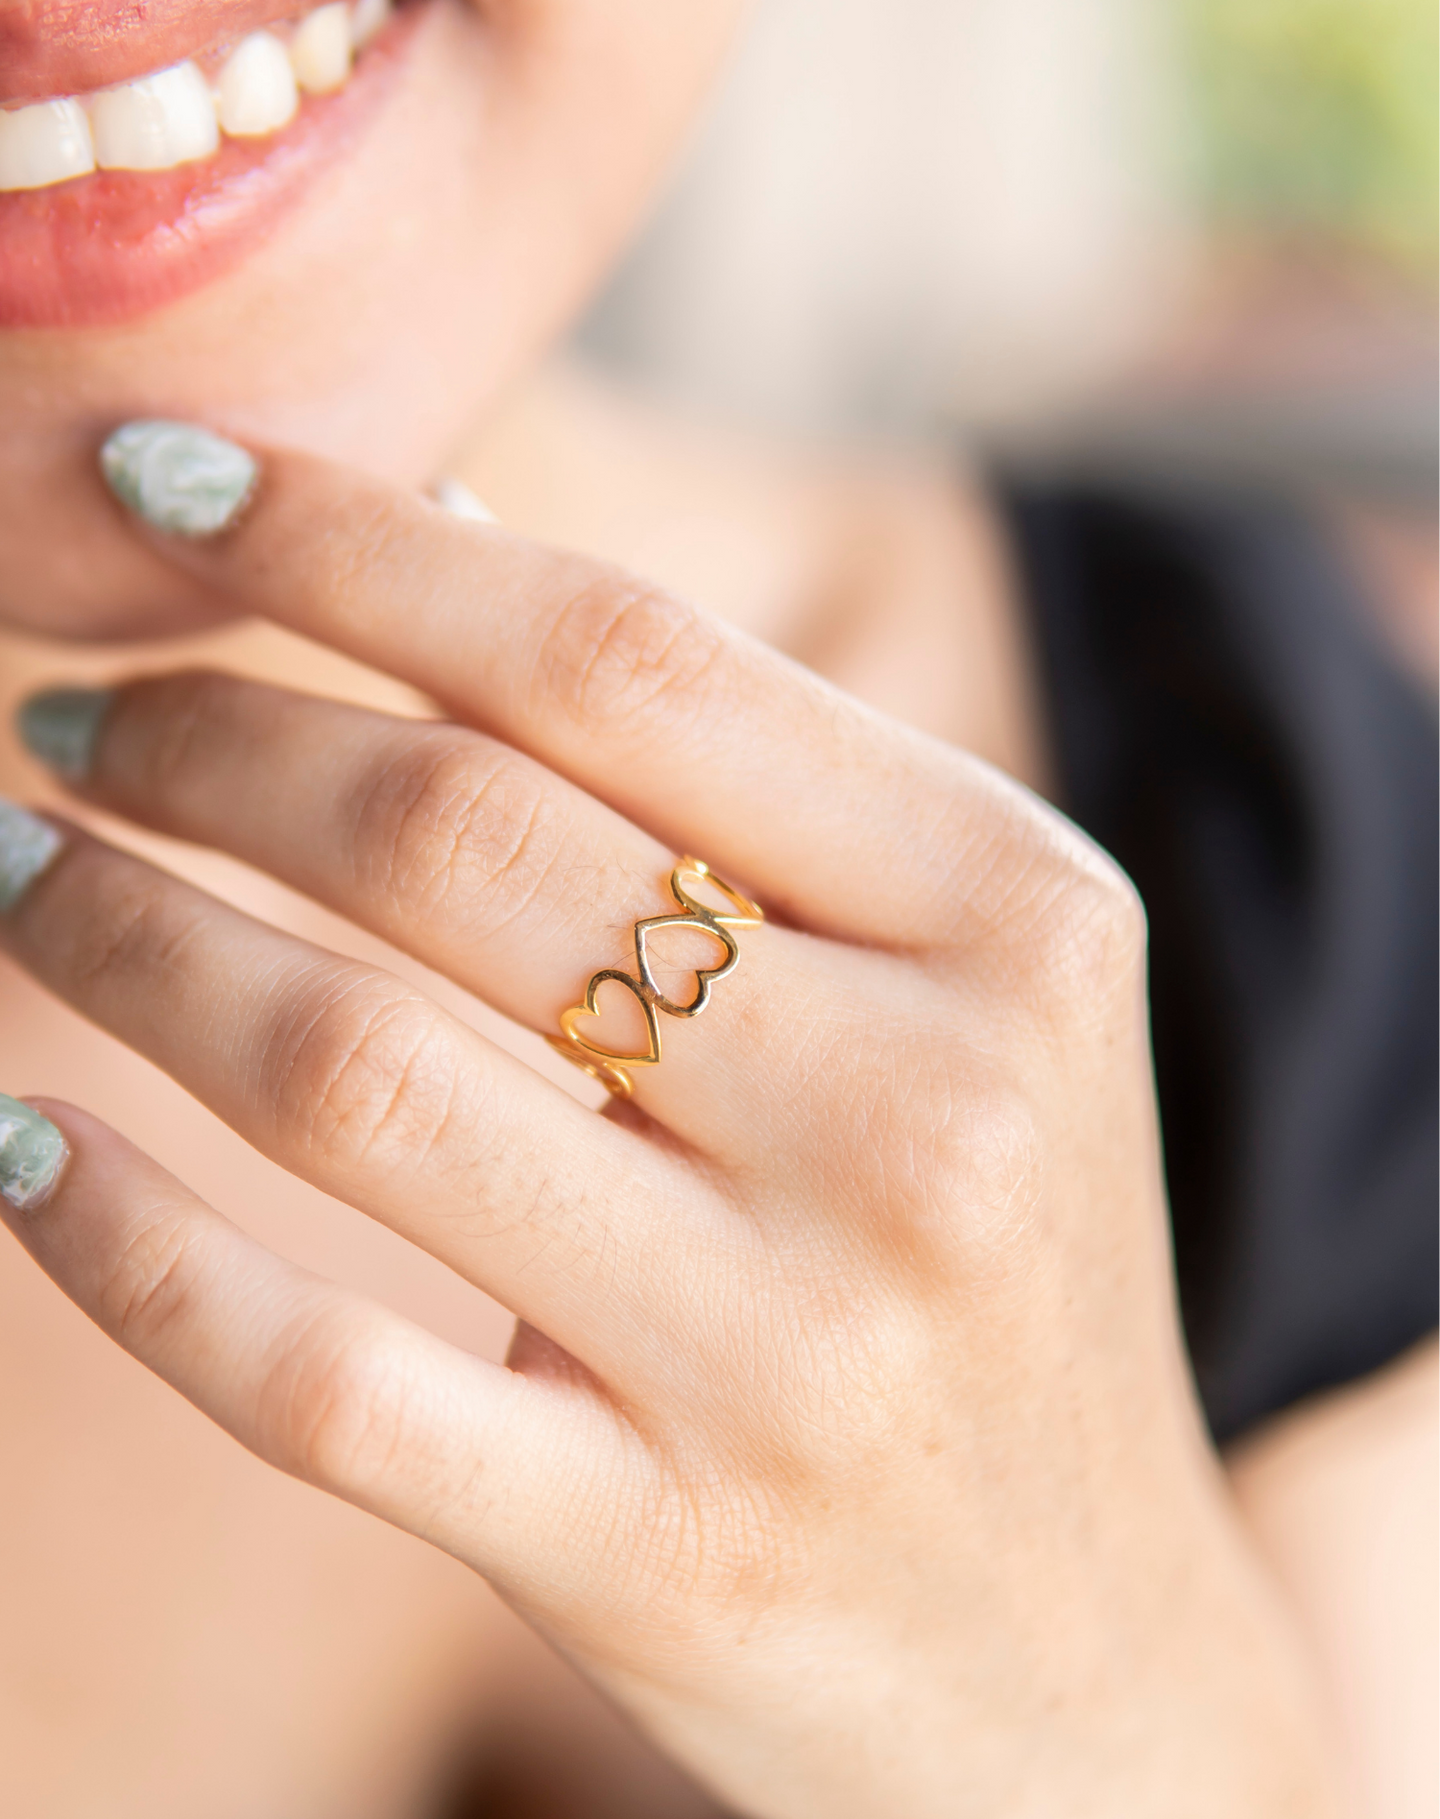 Dainty Love Rings | Upakarna | Best Handcrafted Jewelry